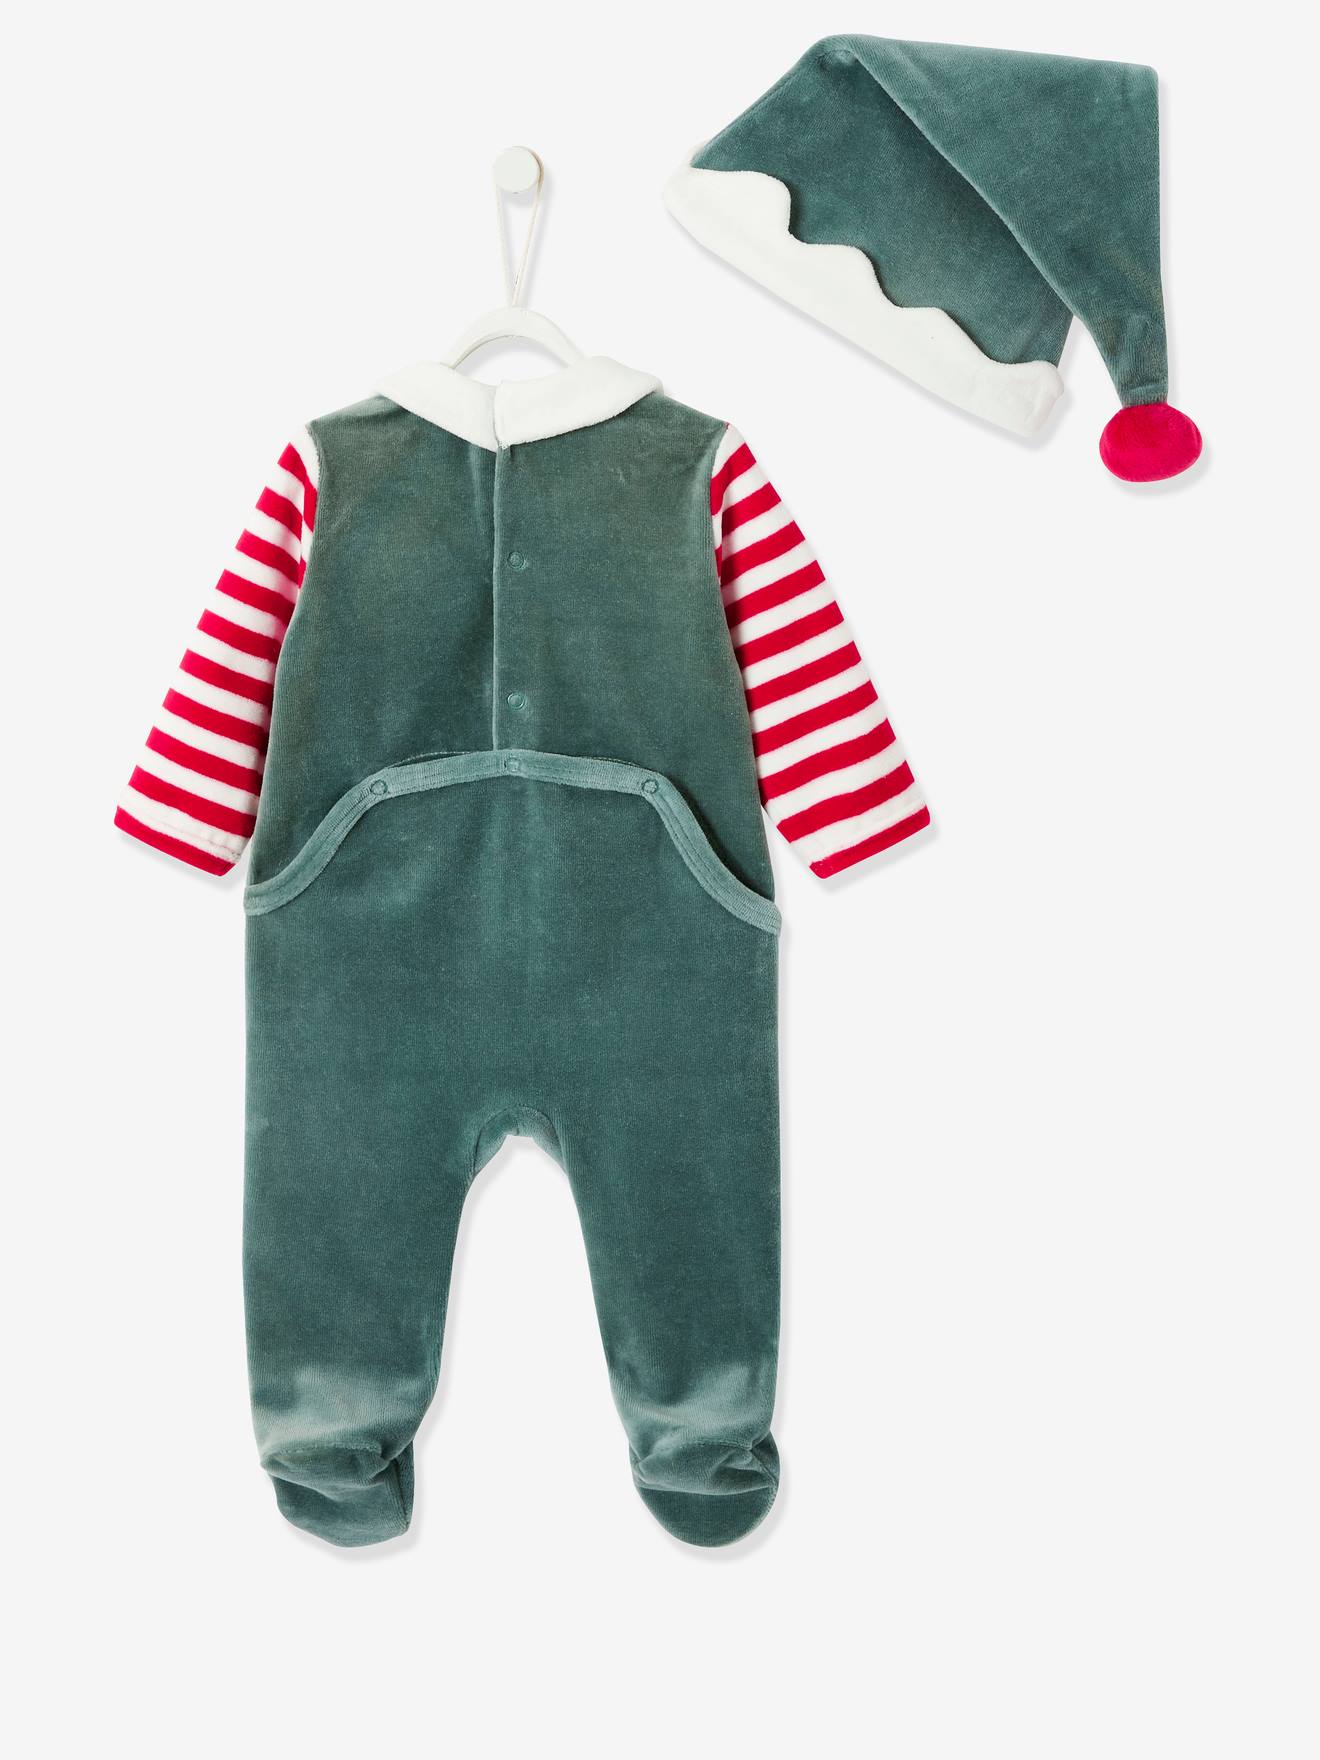 Bébé miniature en pyjama de lutin vert en fimo : annonce grossesse -   France